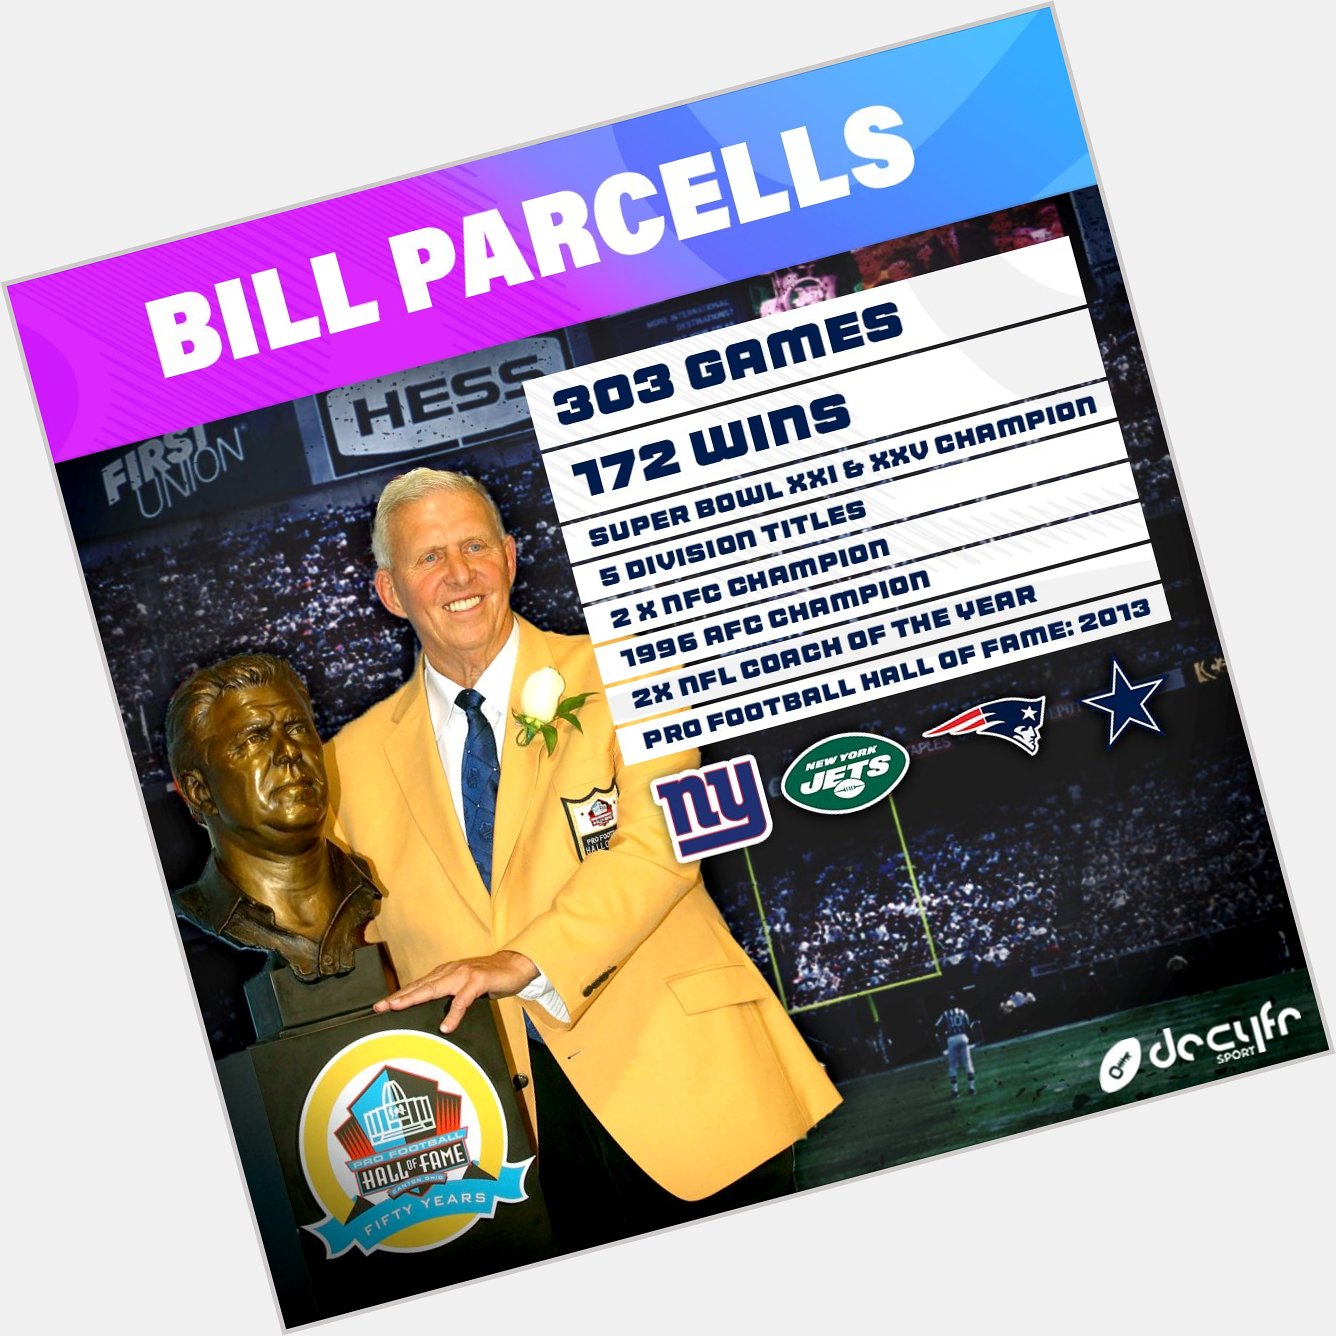 Happy birthday to head coach, Bill Parcells!     